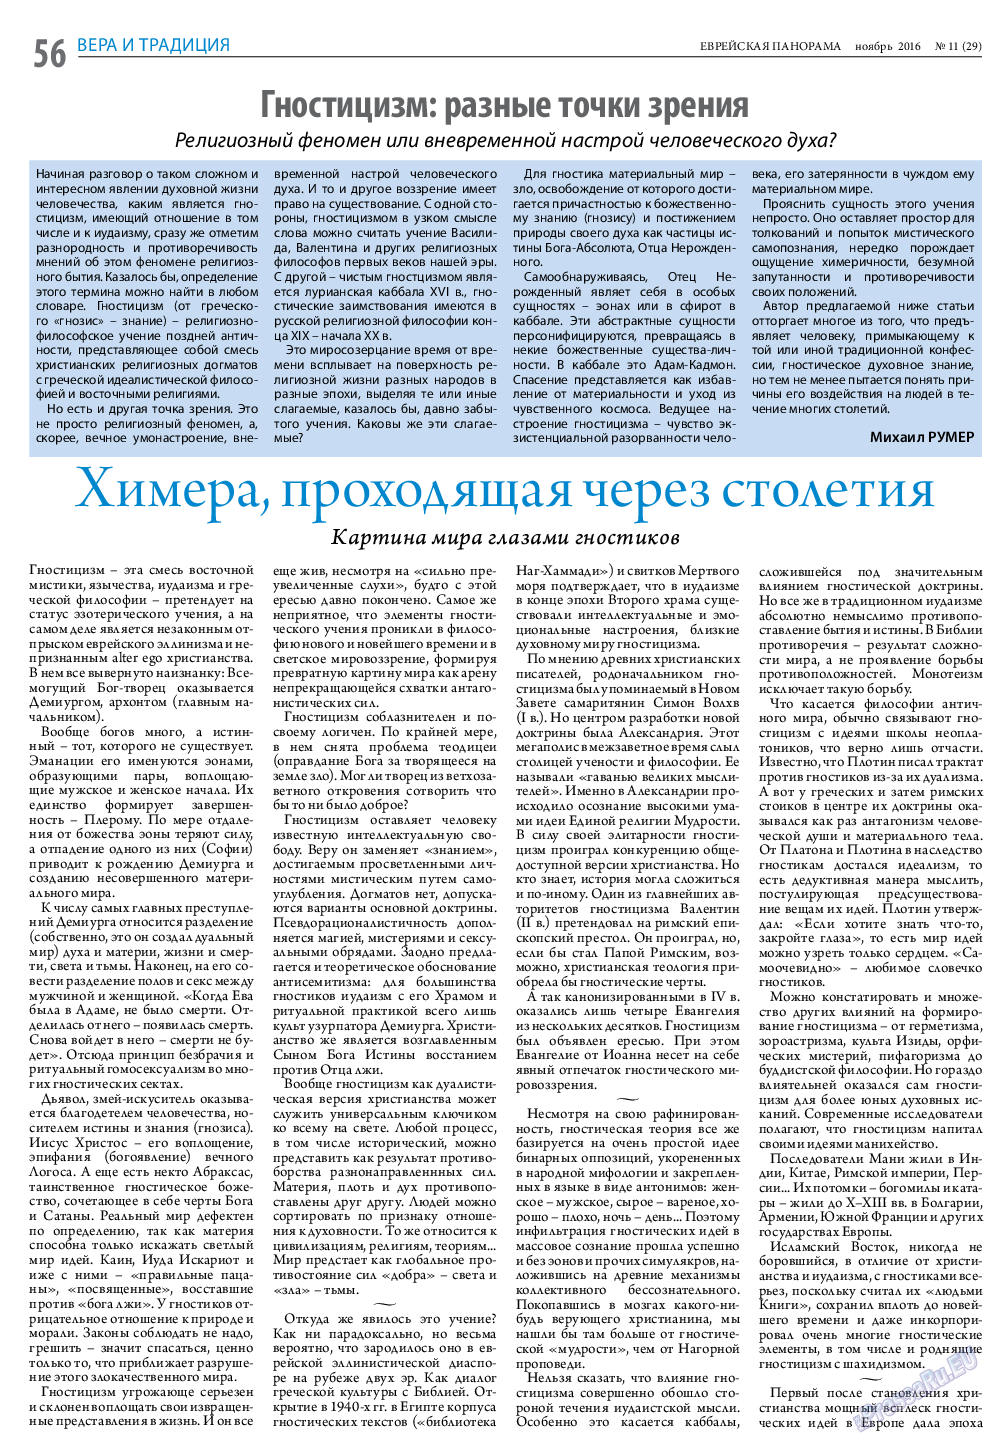 Еврейская панорама, газета. 2016 №11 стр.56